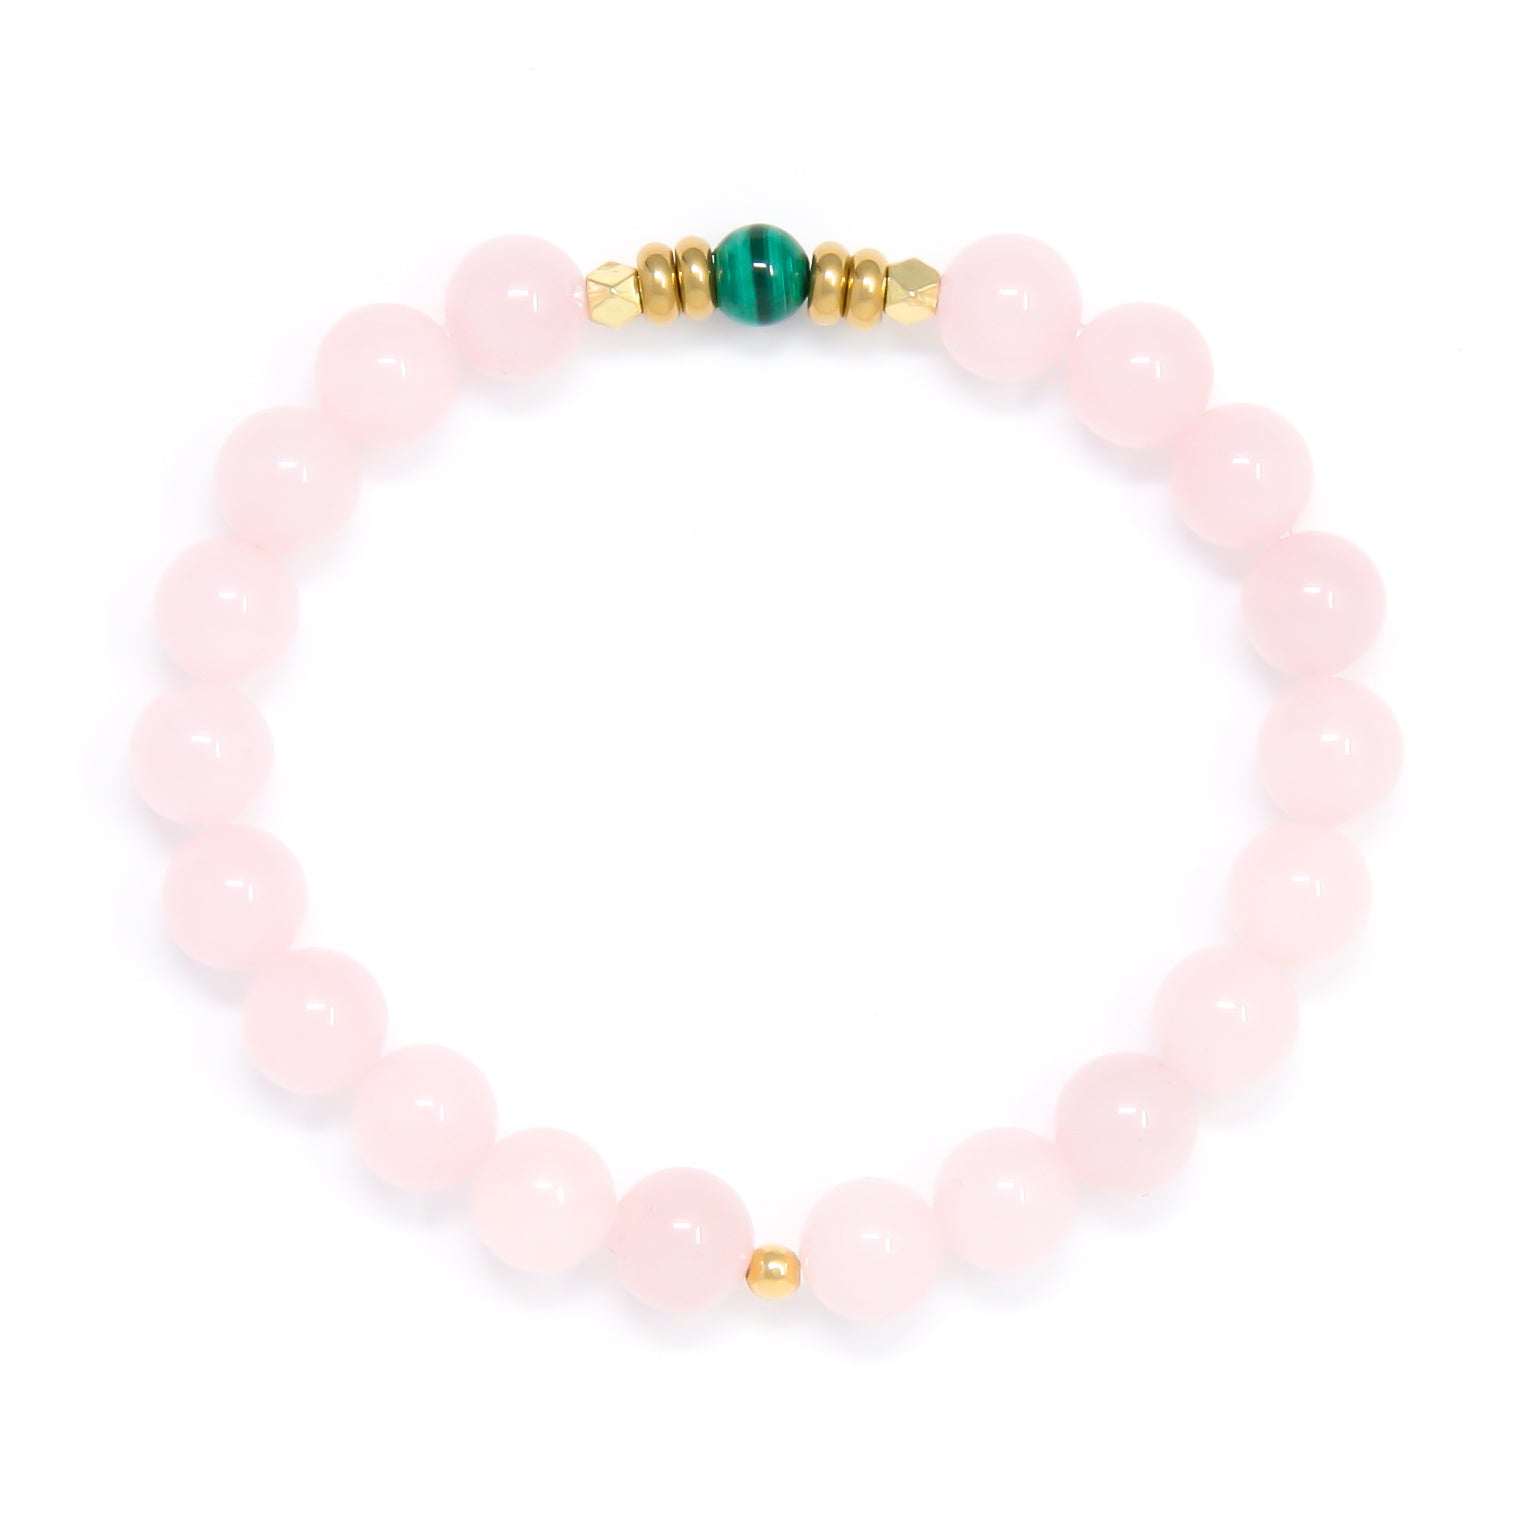 pink Rose Quartz mala bracelet, handmade jewelry